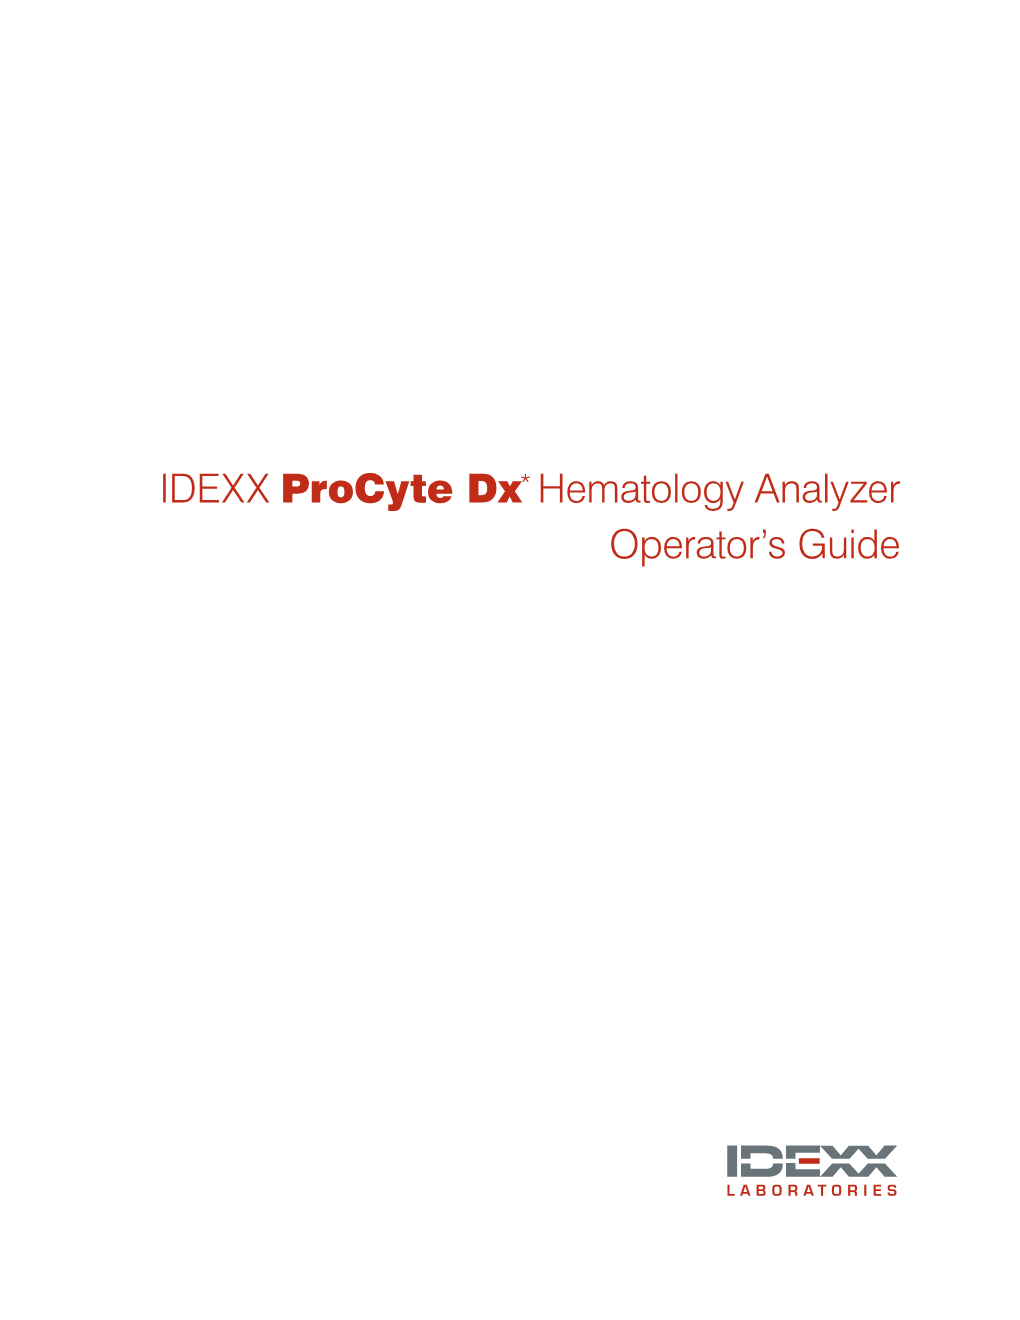 IDEXX Procyte Dx* Hematology Analyzer Operator's Guide